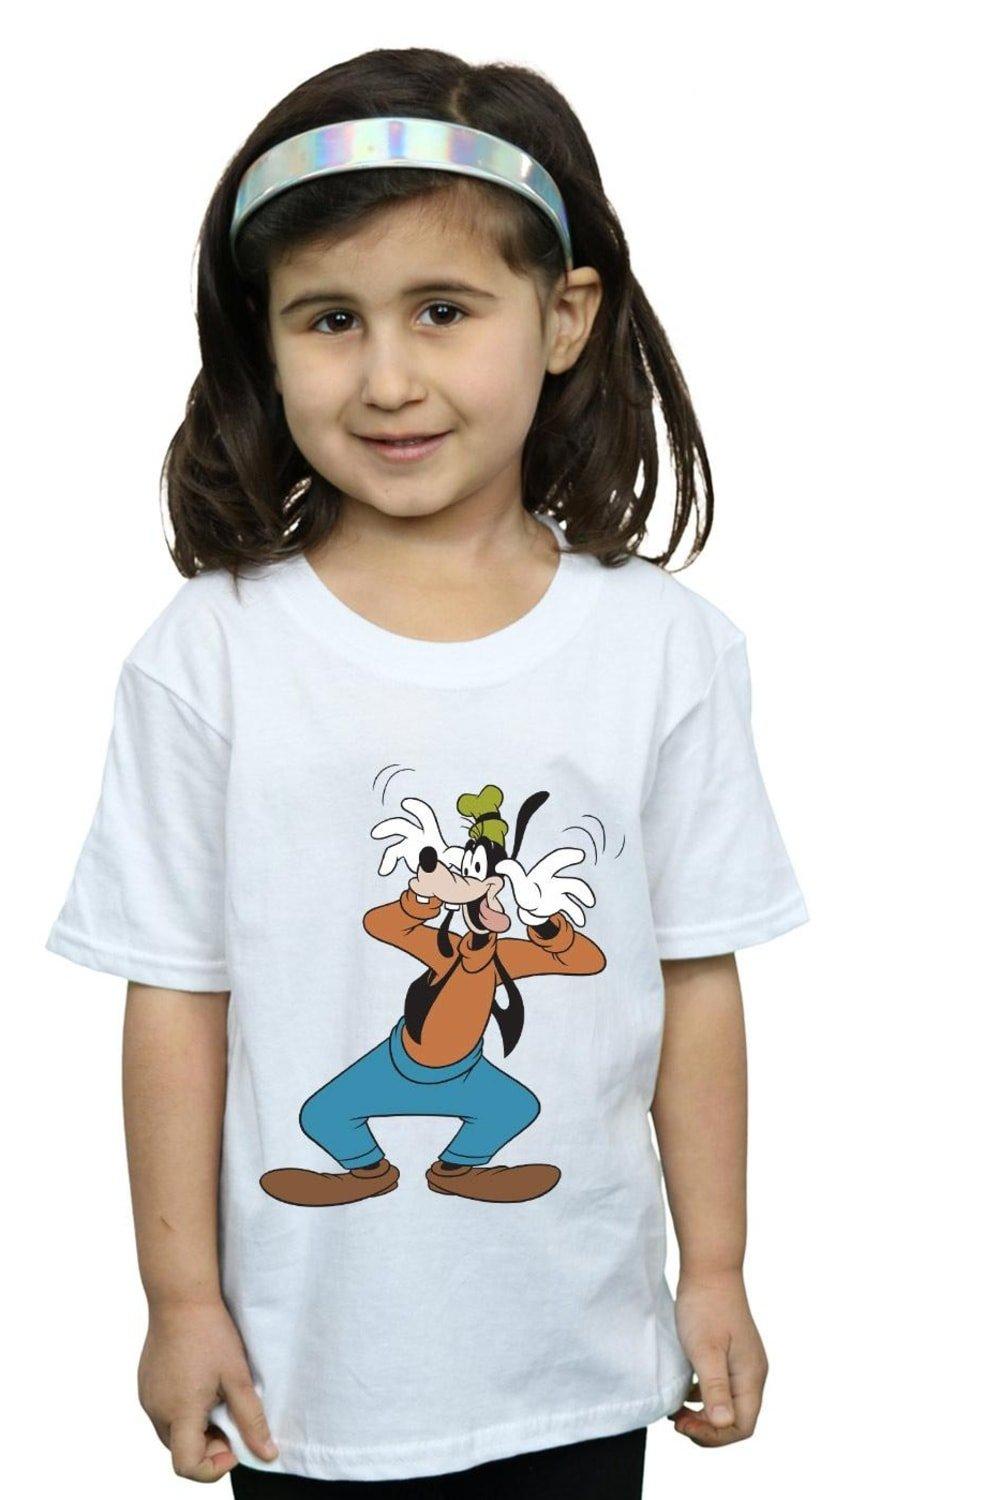 Disney's New Maine T-Shirt is Goofy